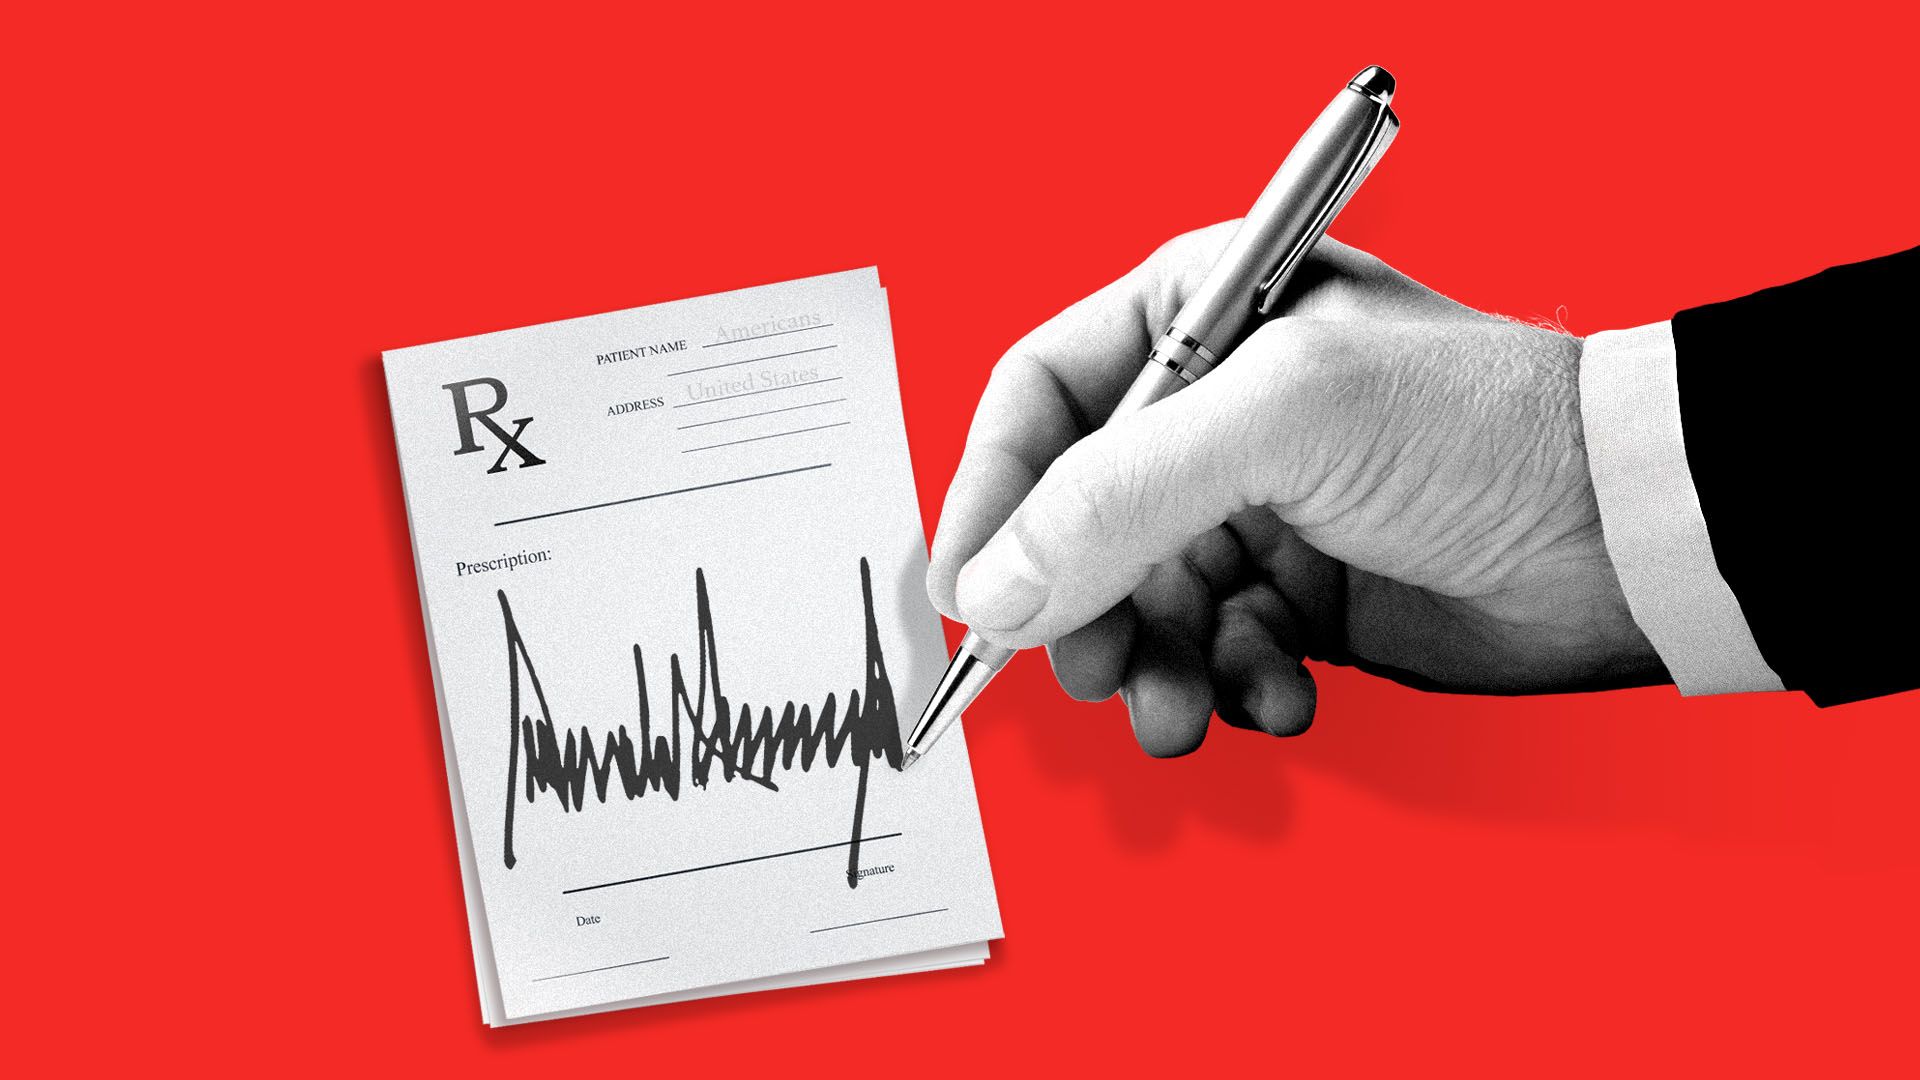 Illustration of Trump signing a prescription pad.